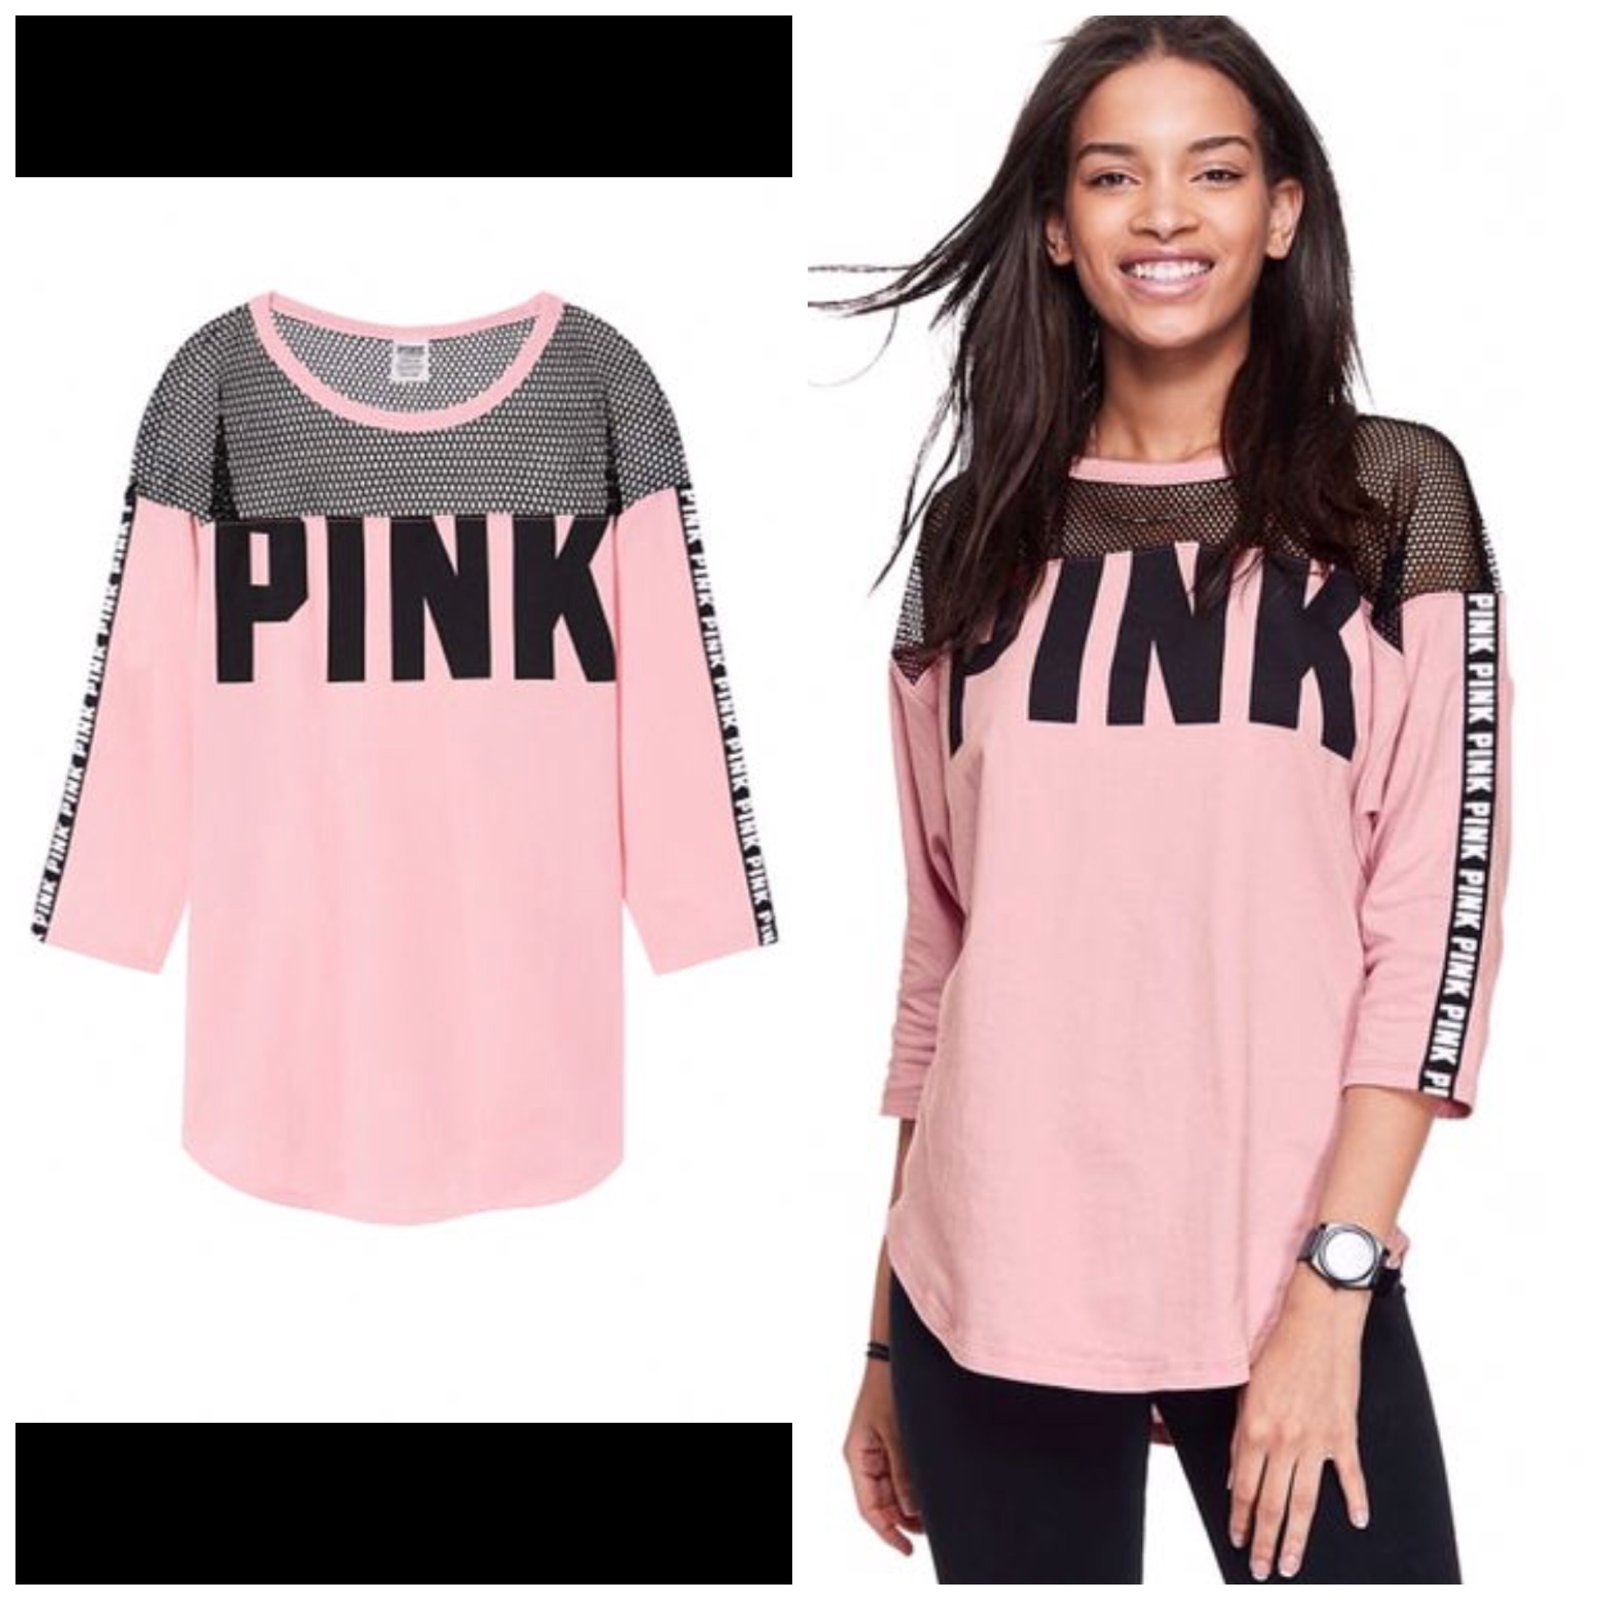 victoria secret pink jersey shirts